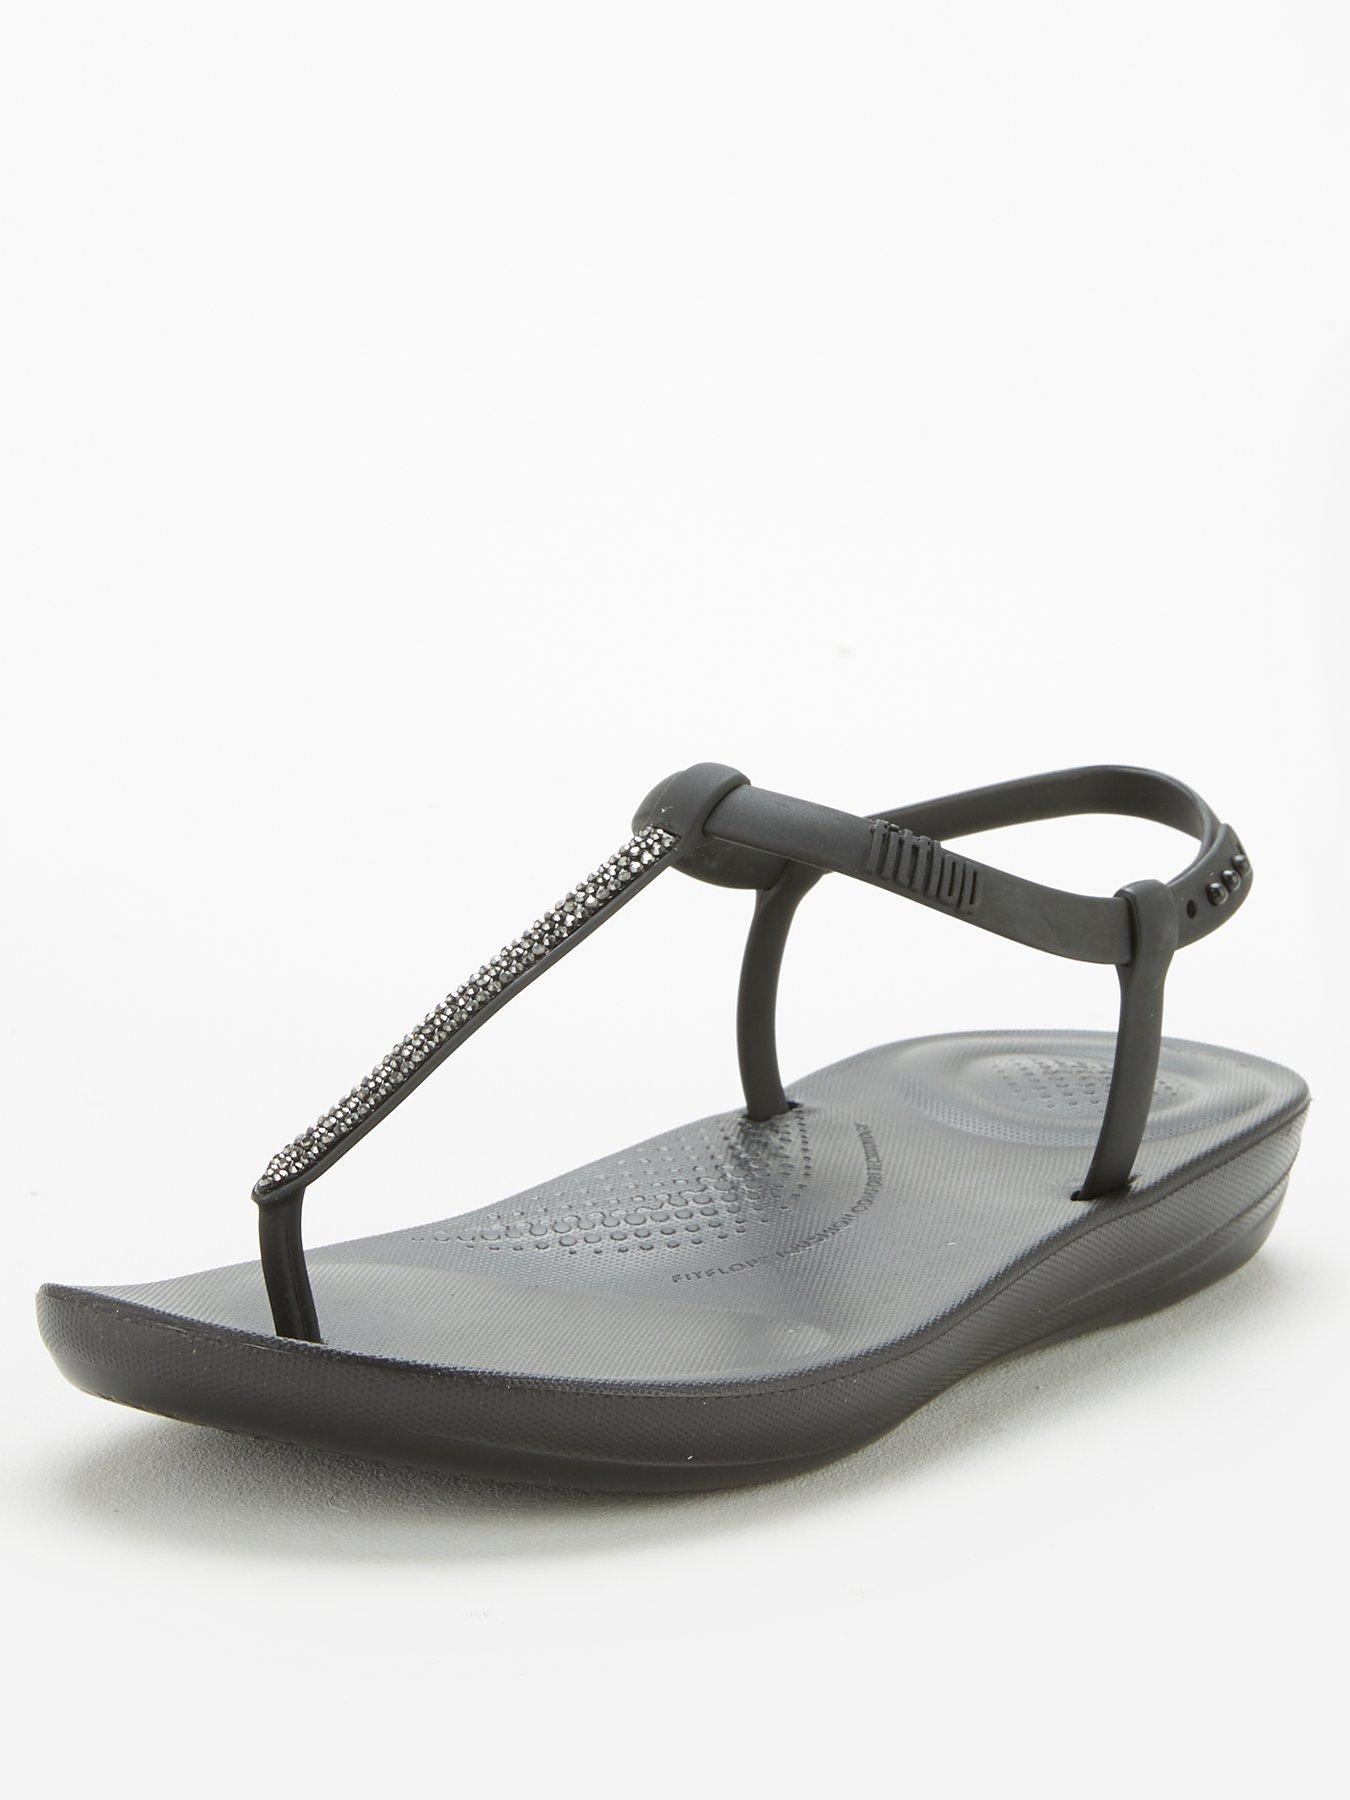 Fitflop | Sandals \u0026 flip flops | Shoes 